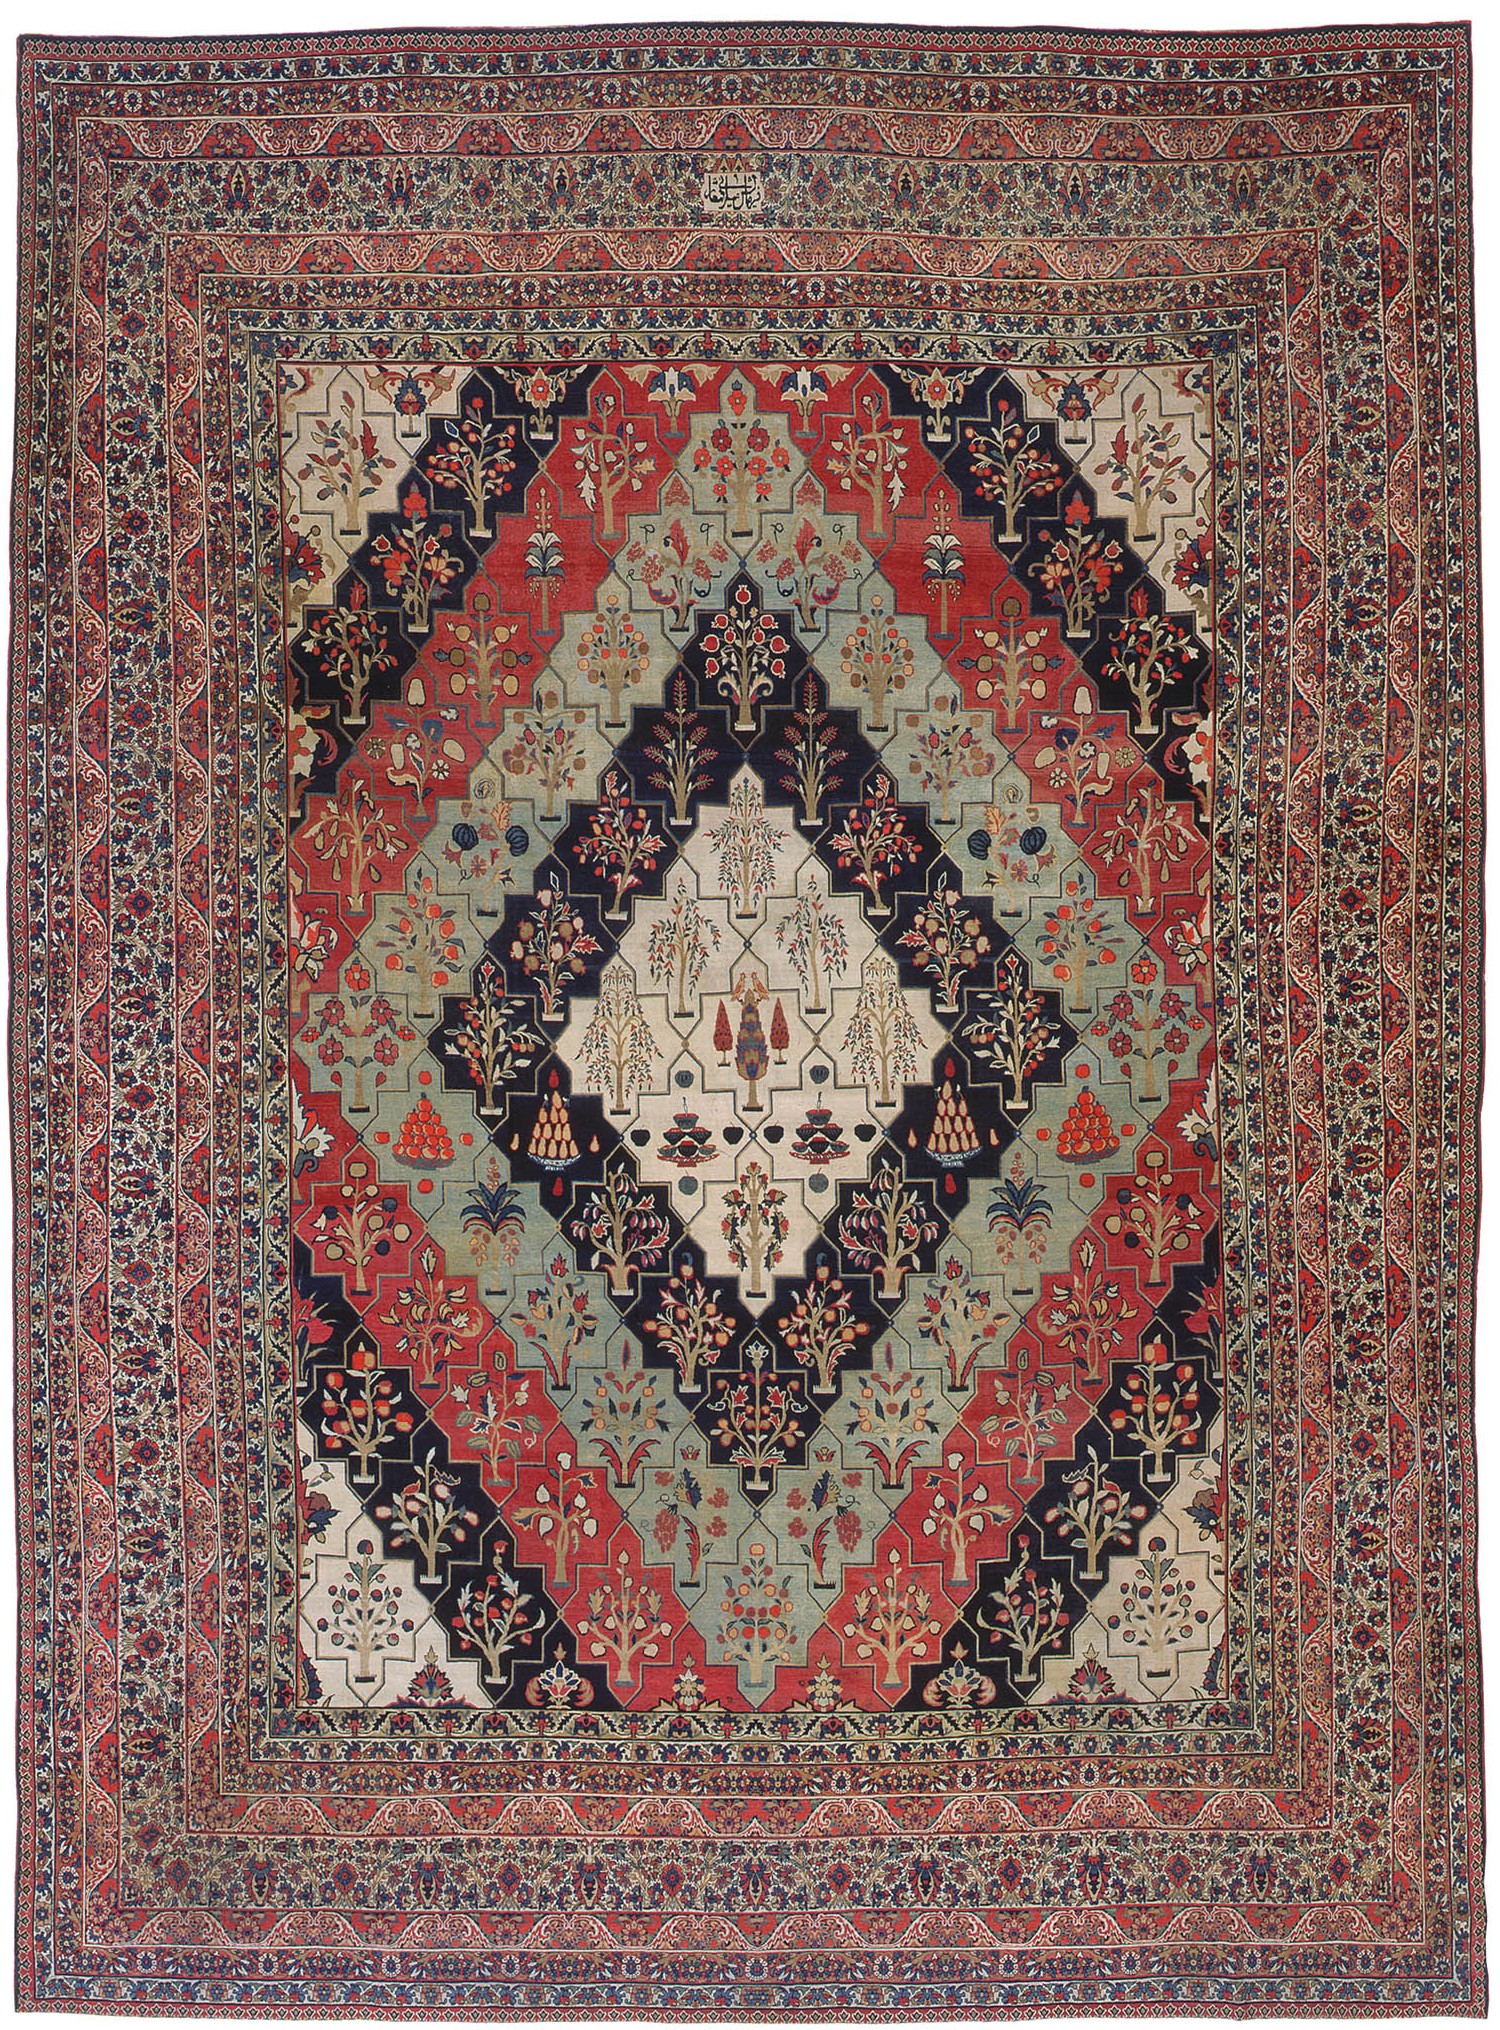 Kerman Carpet Wikipedia